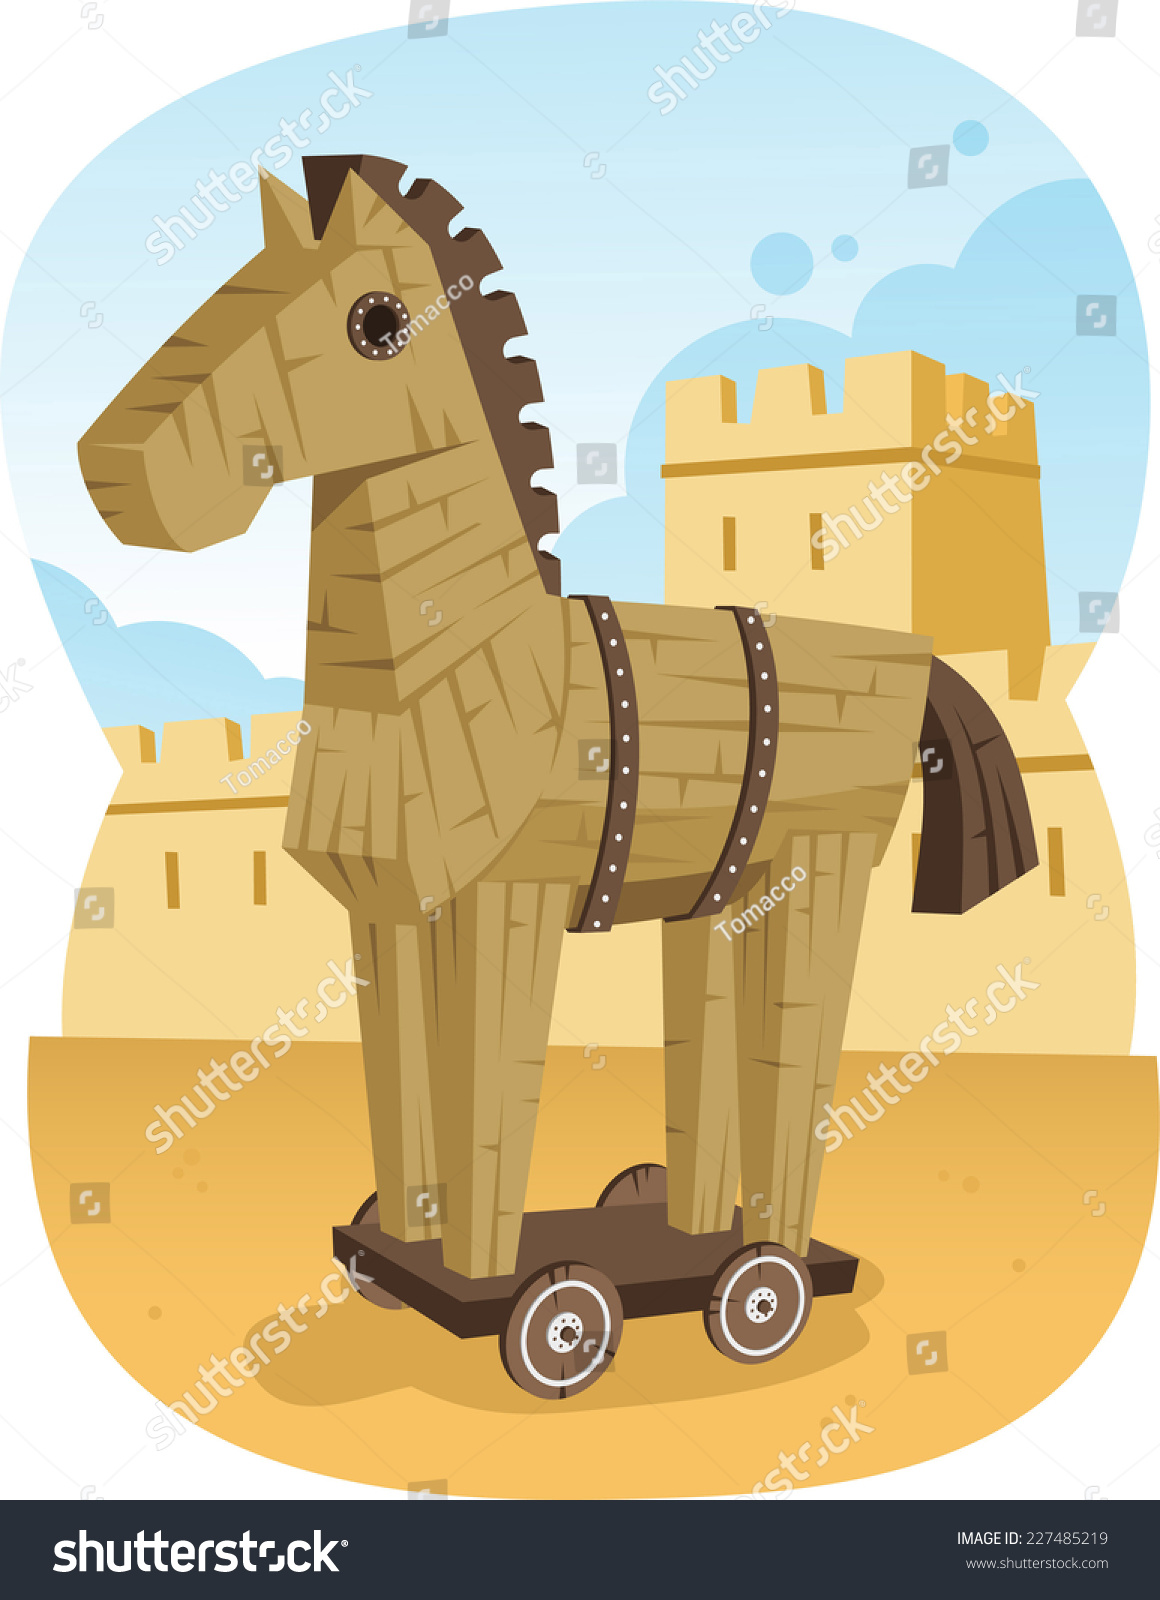 trojan horse clipart - photo #24